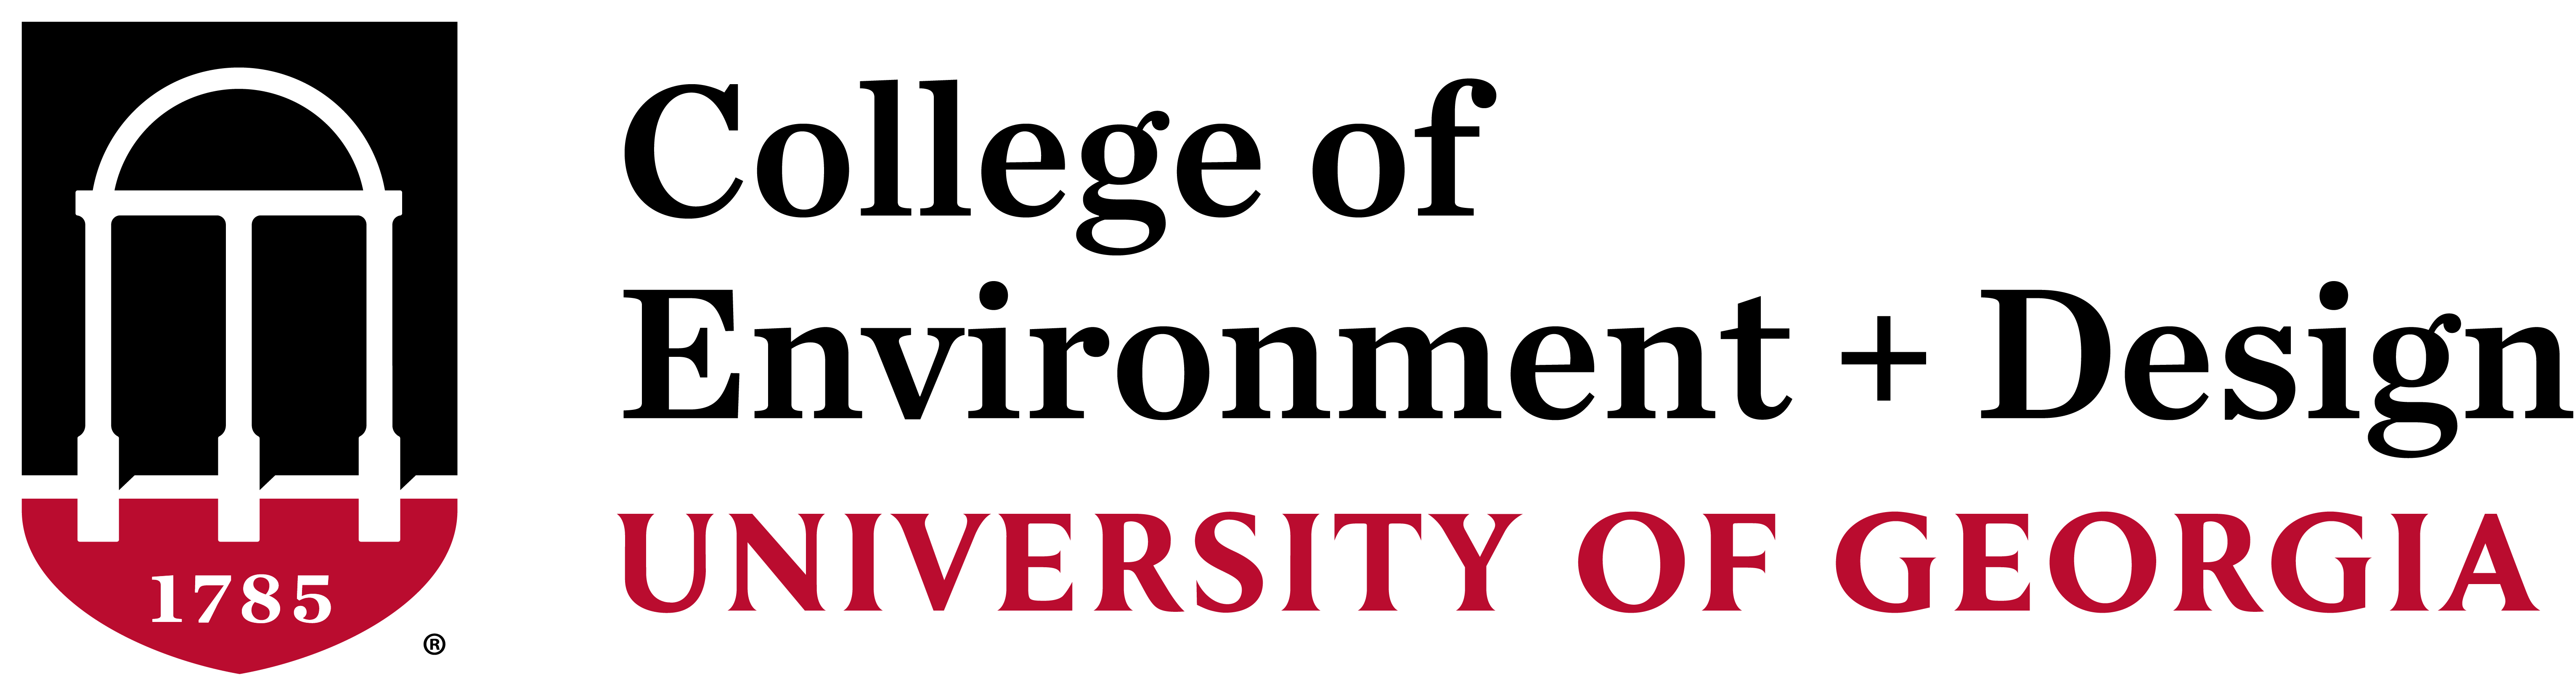 College of Environment + Design Logo